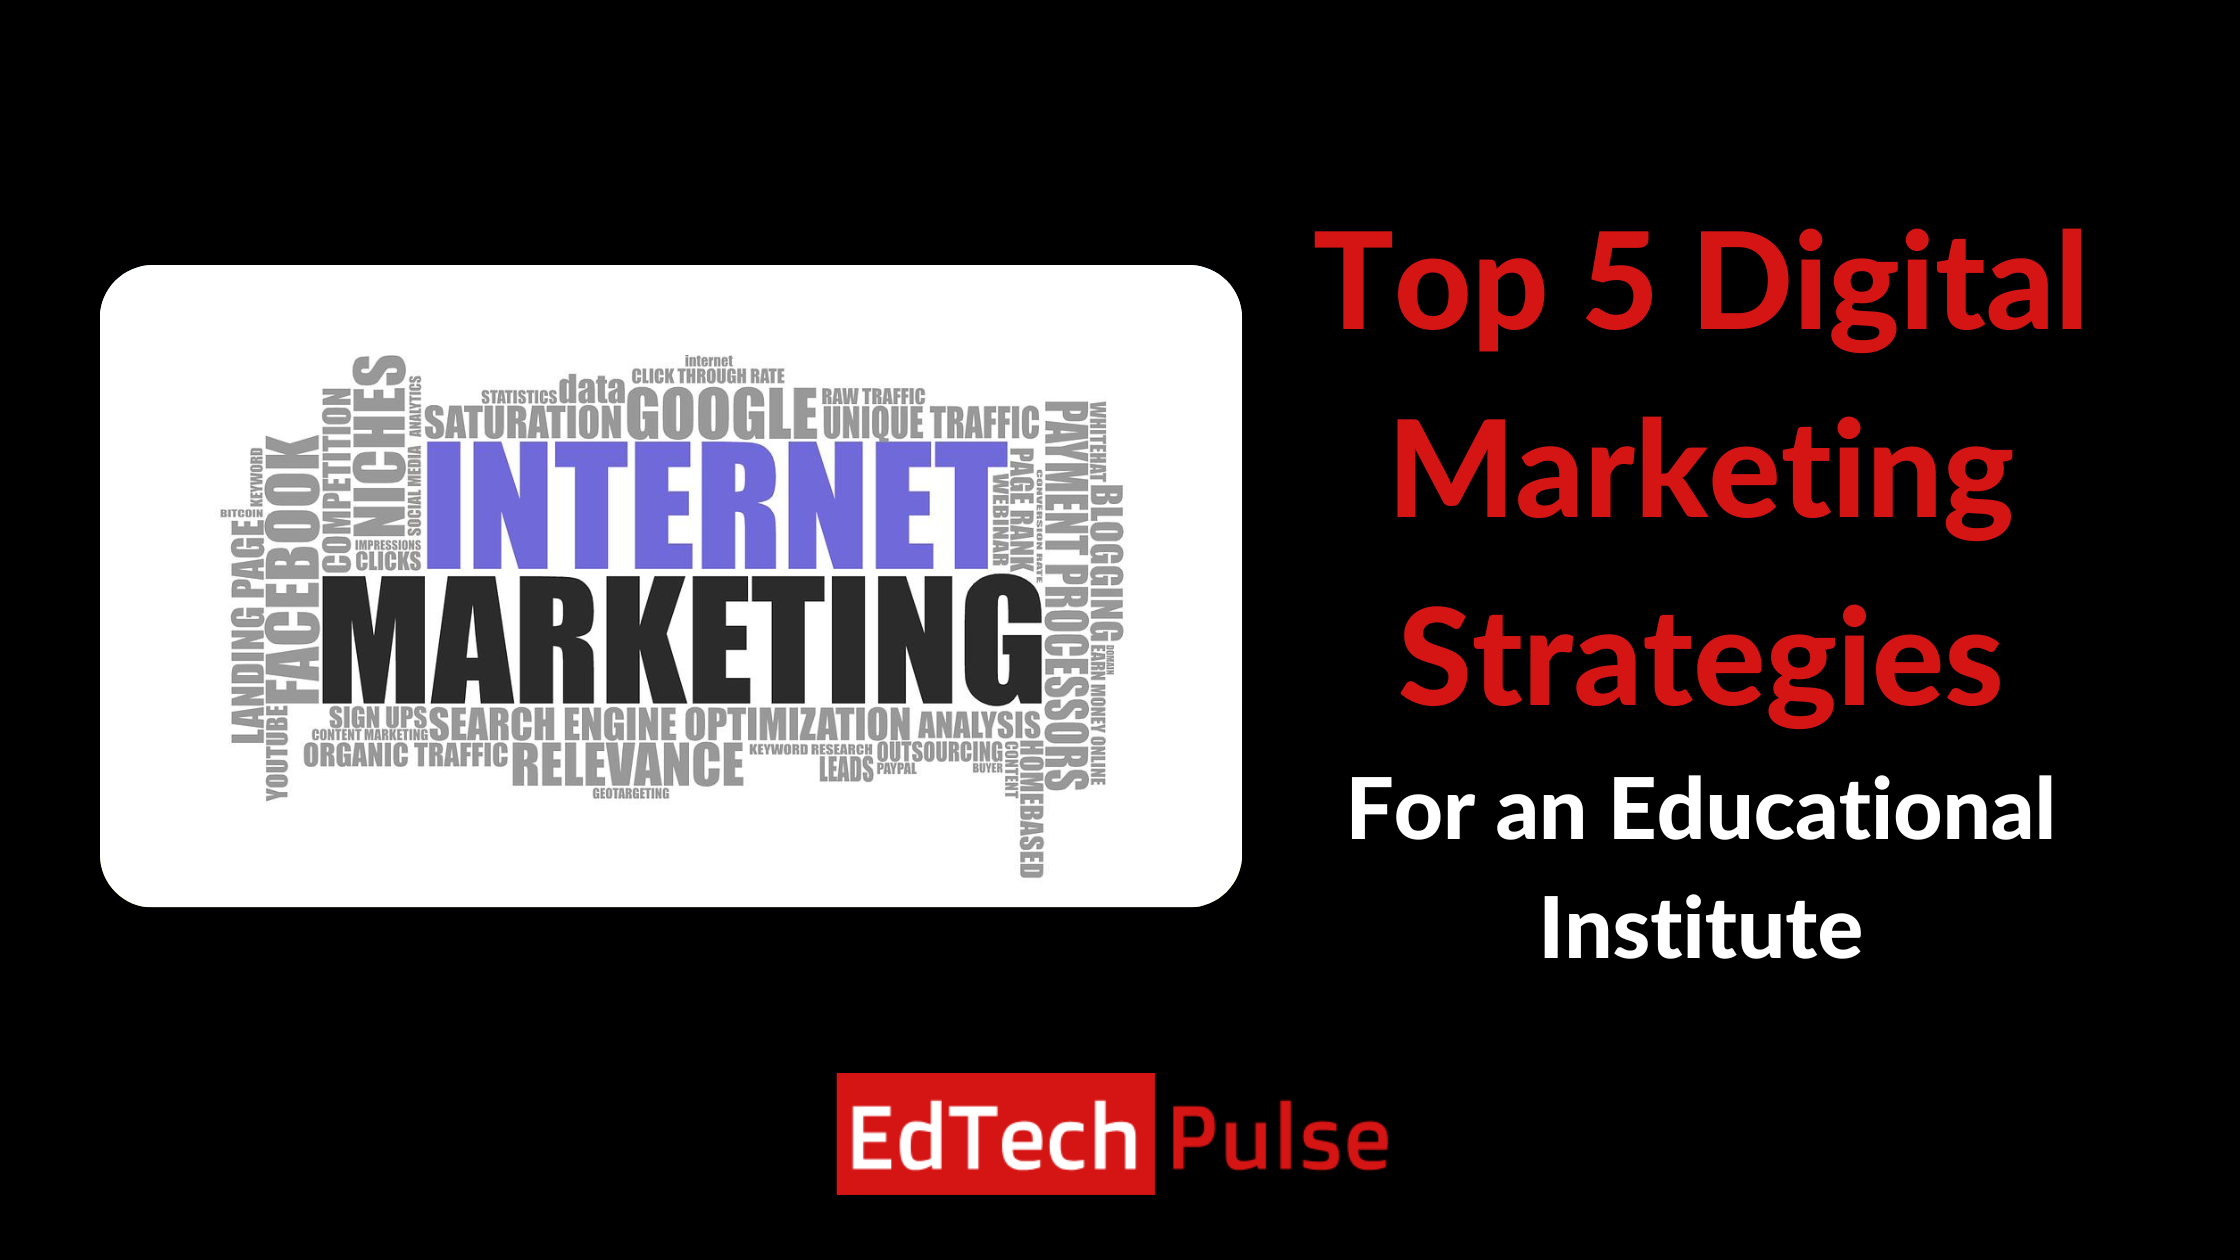 Top 5 Digital Marketing Strategies for an Educational Institute